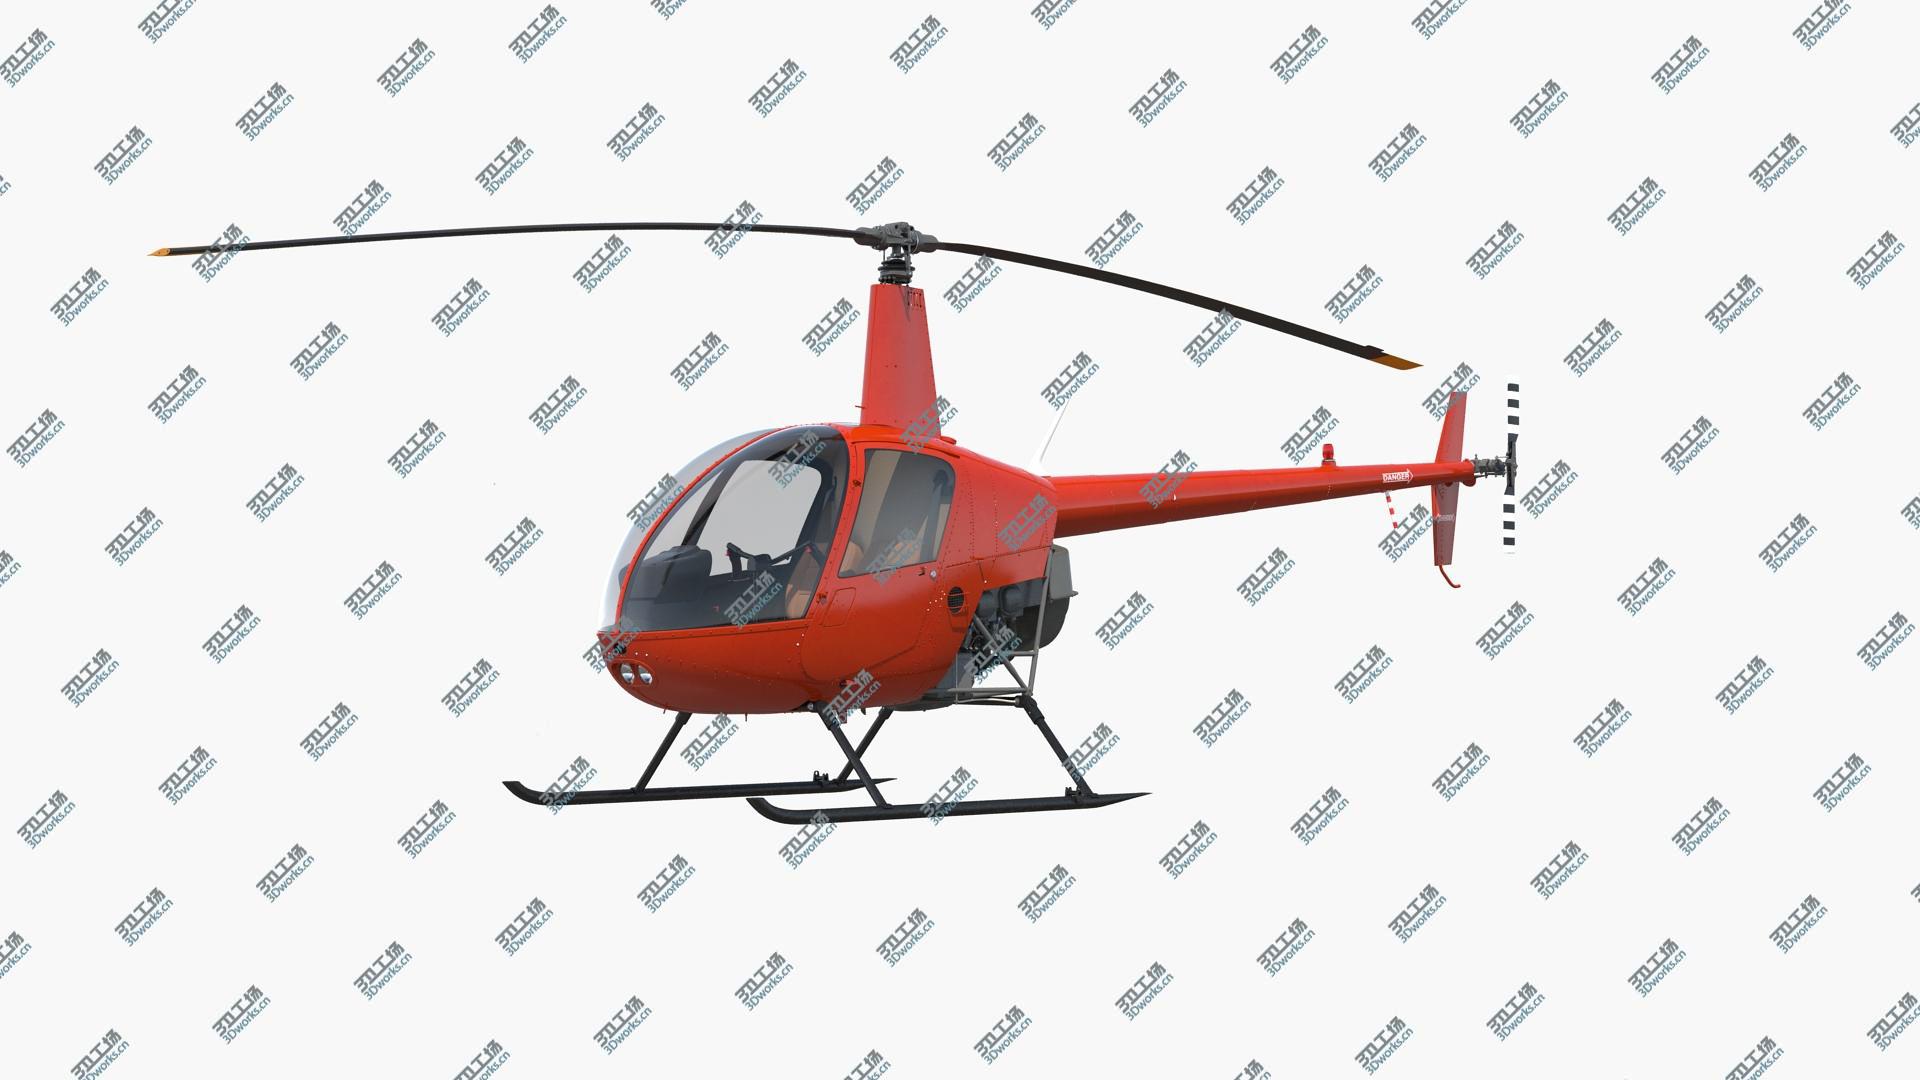 images/goods_img/20210319/3D Lightweight Helicopter model/2.jpg